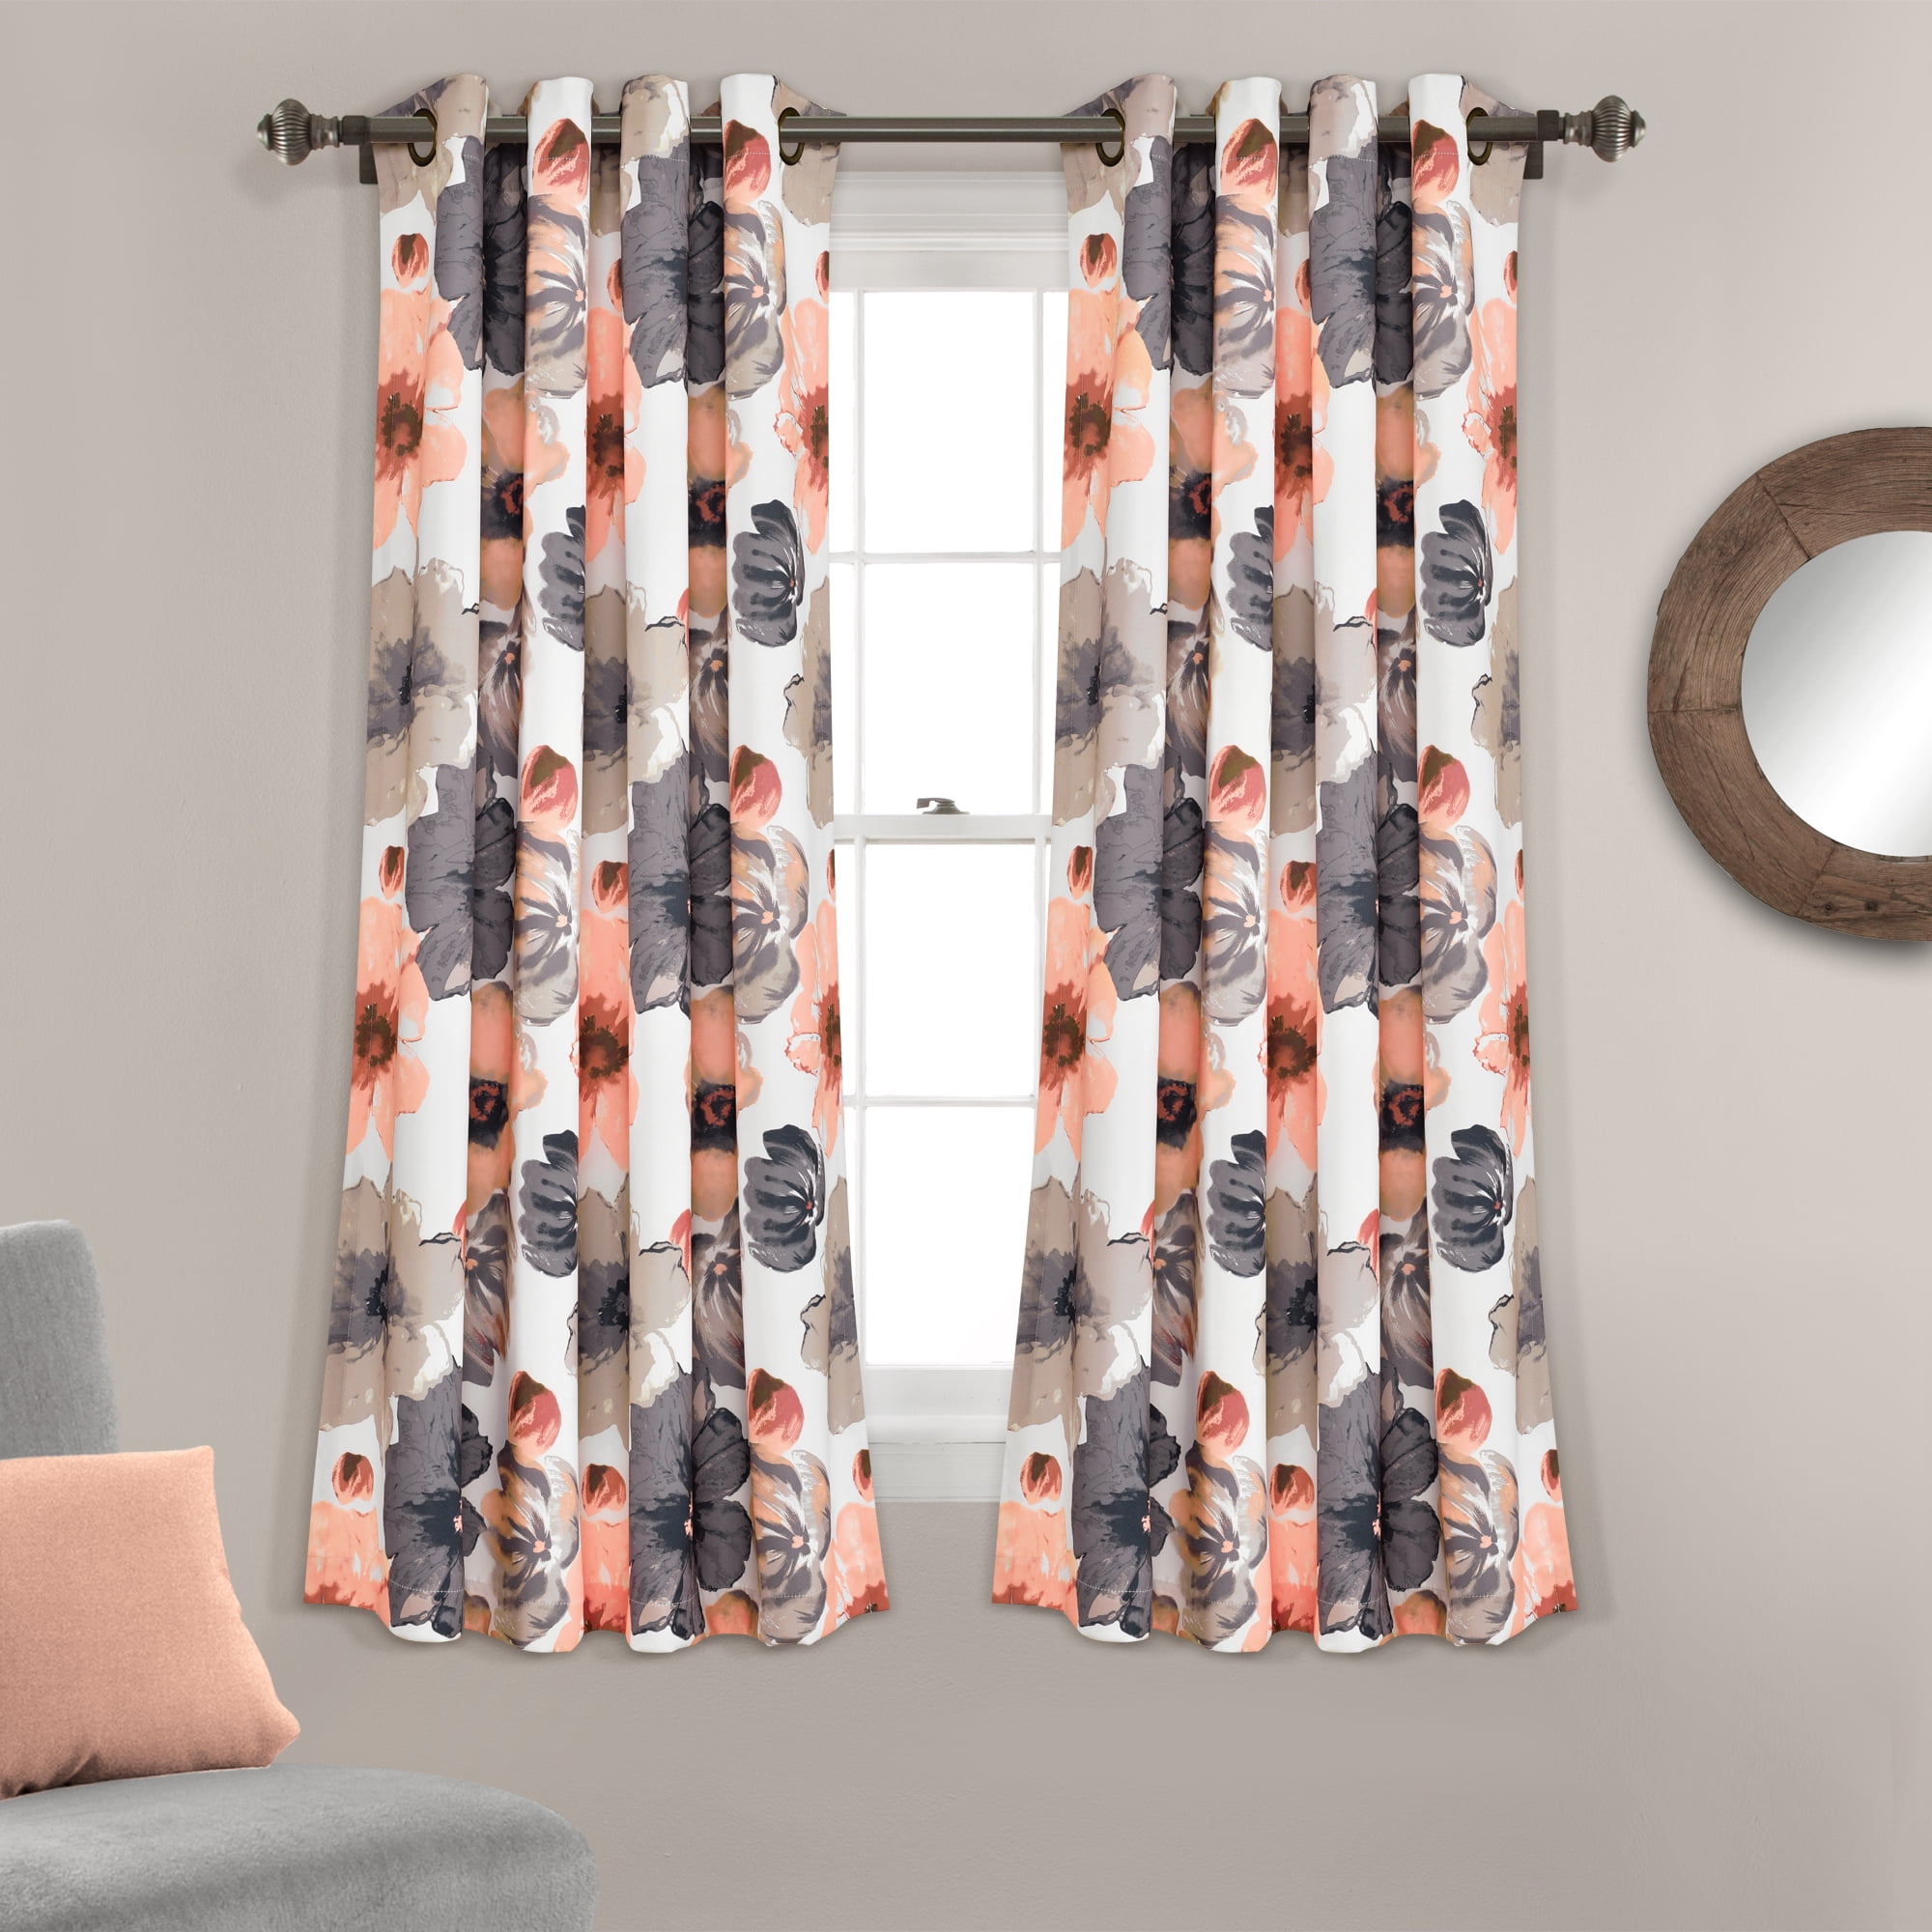 3D Unicorn Angels Flower Blockout Print Home Decor Curtain Drapes Fabric Window 